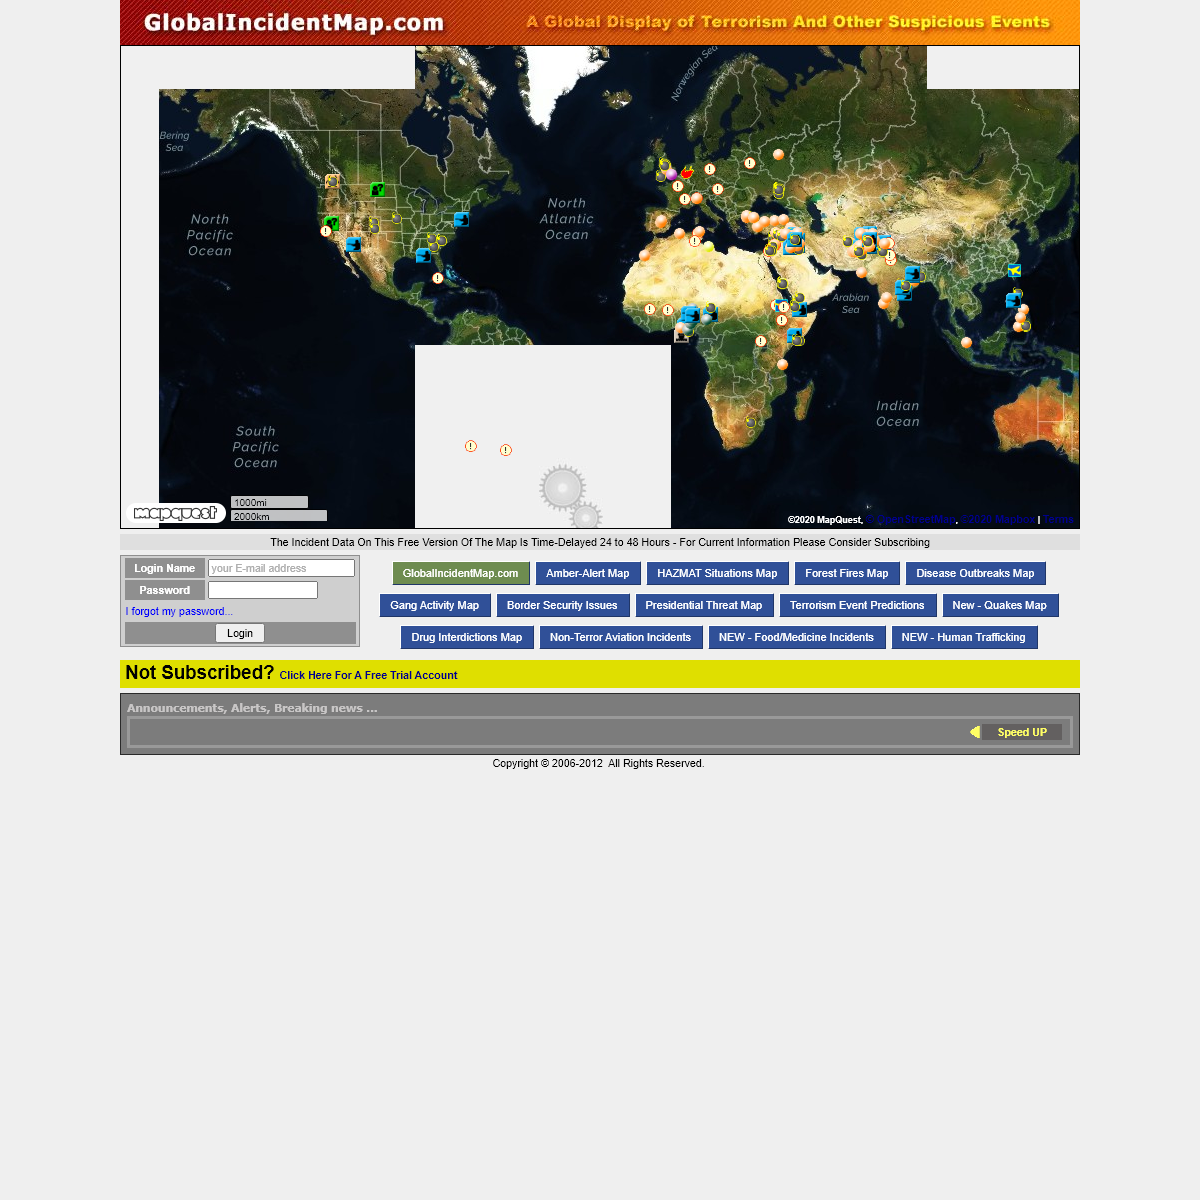 A complete backup of globalincidentmap.com